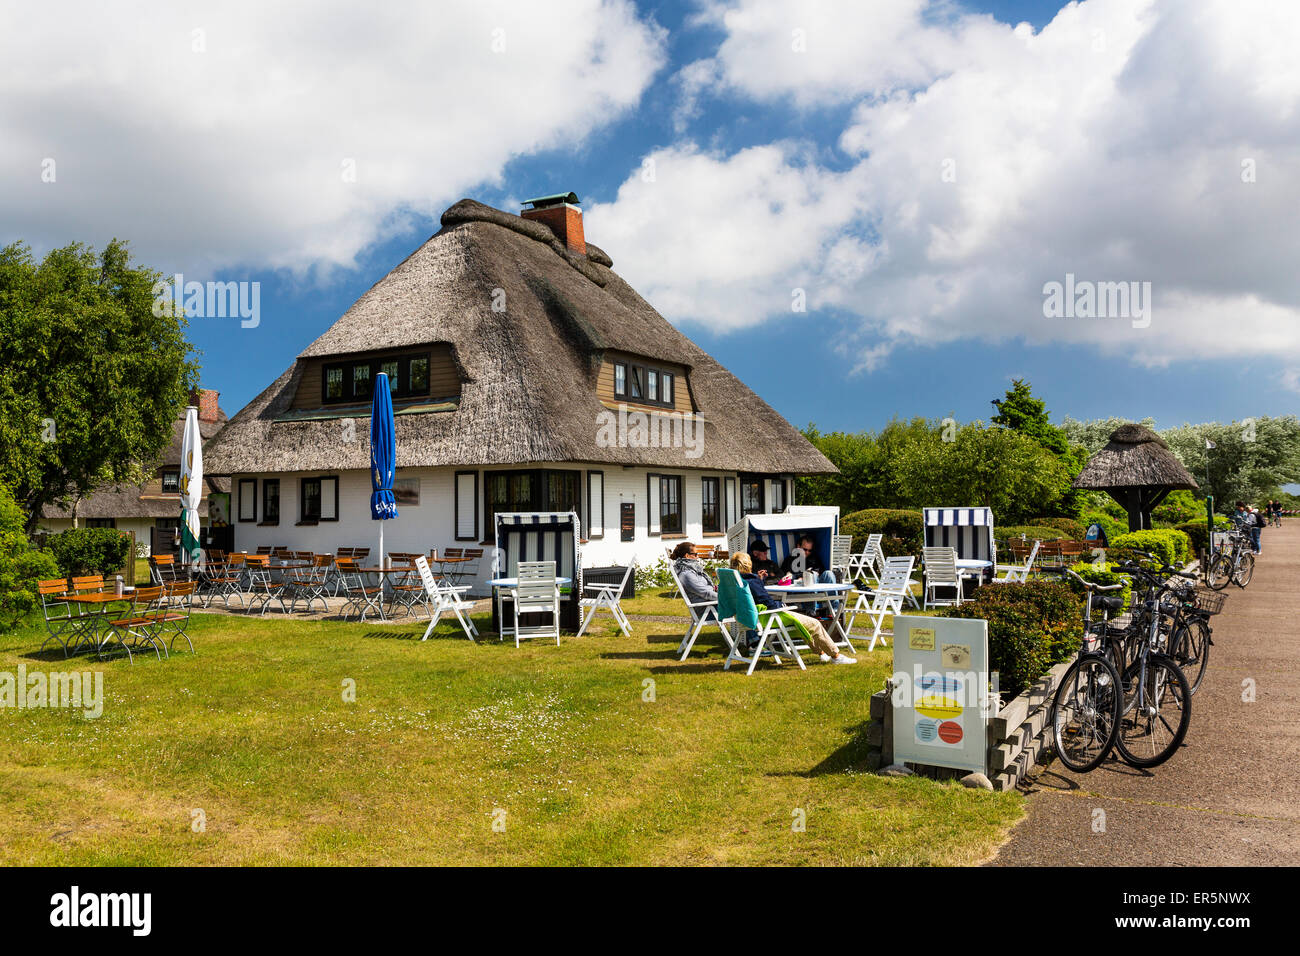 Cafe Teestube with thatched house, Langeoog Island, North Sea, East Frisian Islands, East Frisia, Lower Saxony, Germany, Europe Stock Photo